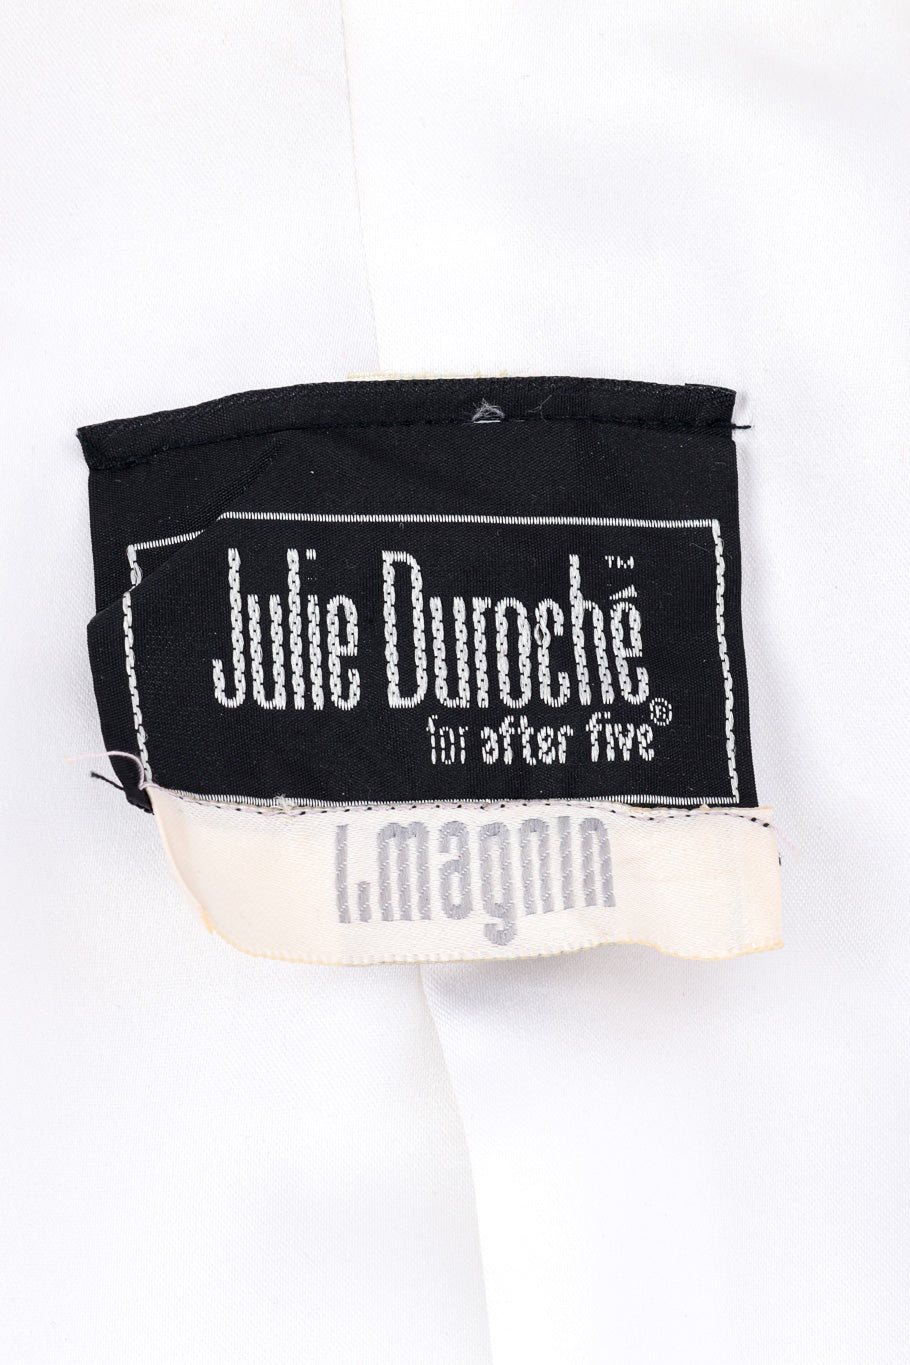  Jacket and skirt set by Julie Duroche label @recessla 